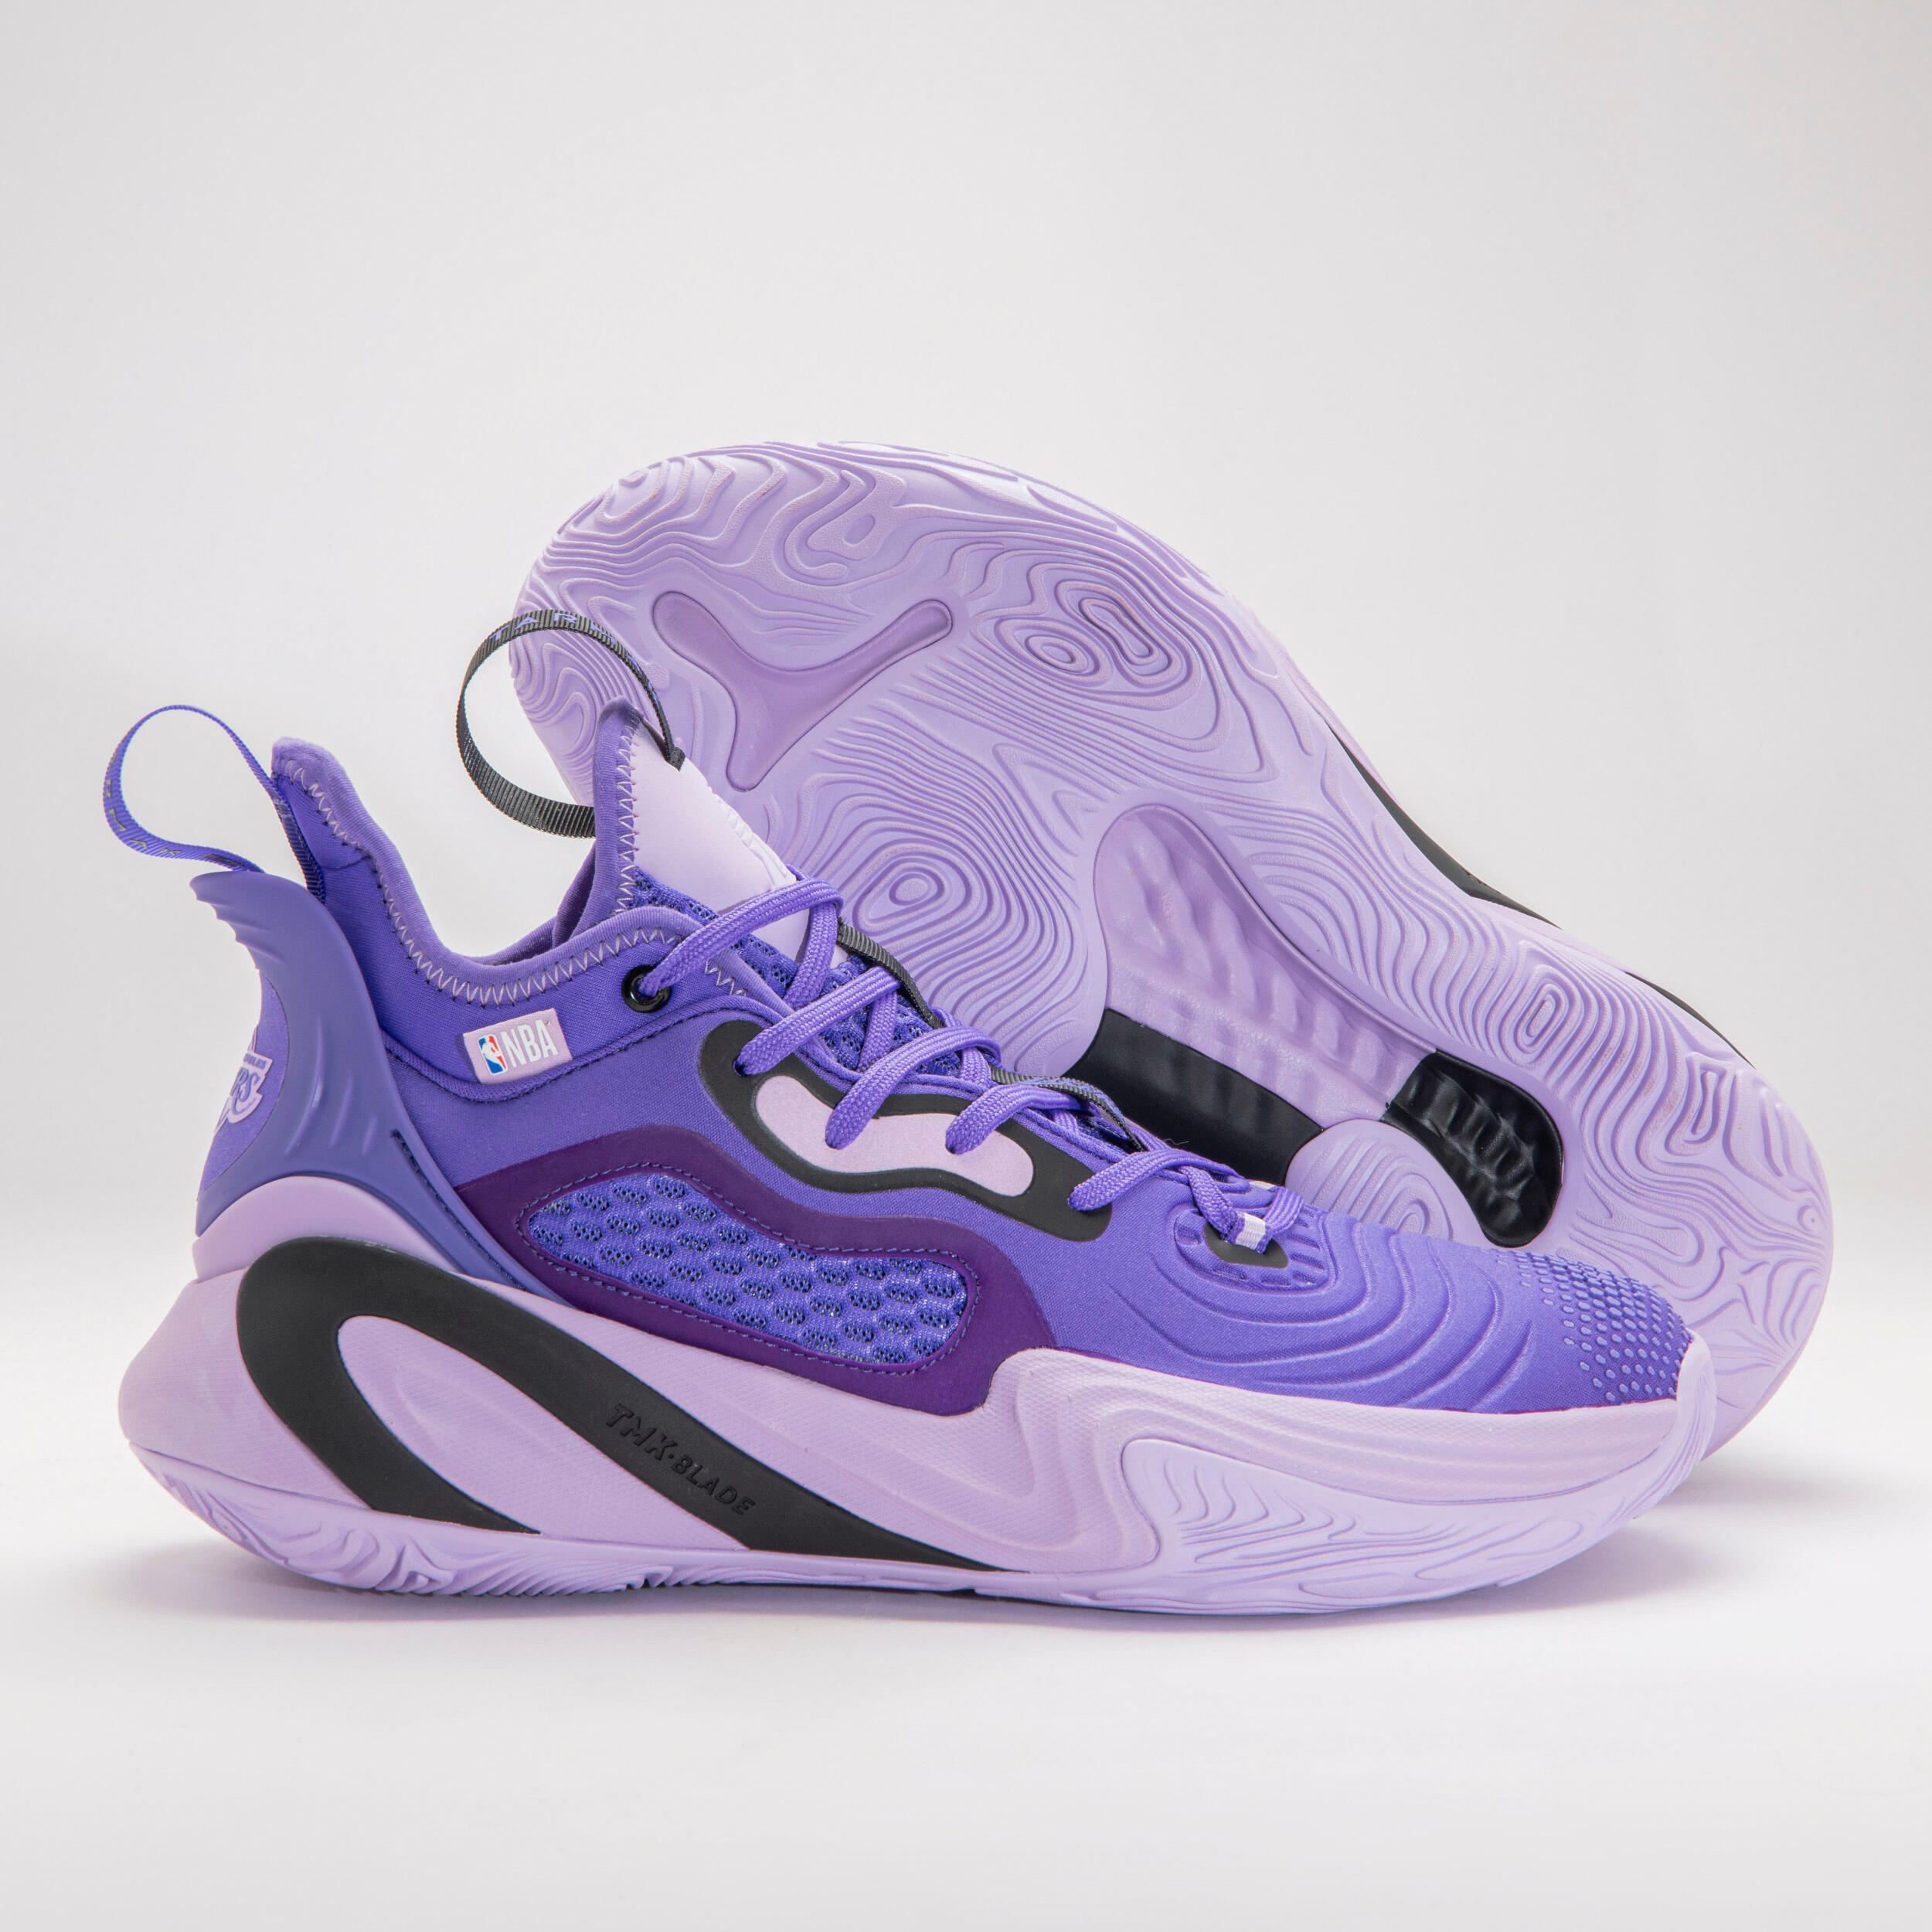 Men's/Women's Basketball Shoes SE900 - Purple/NBA Los Angeles Lakers 6/17